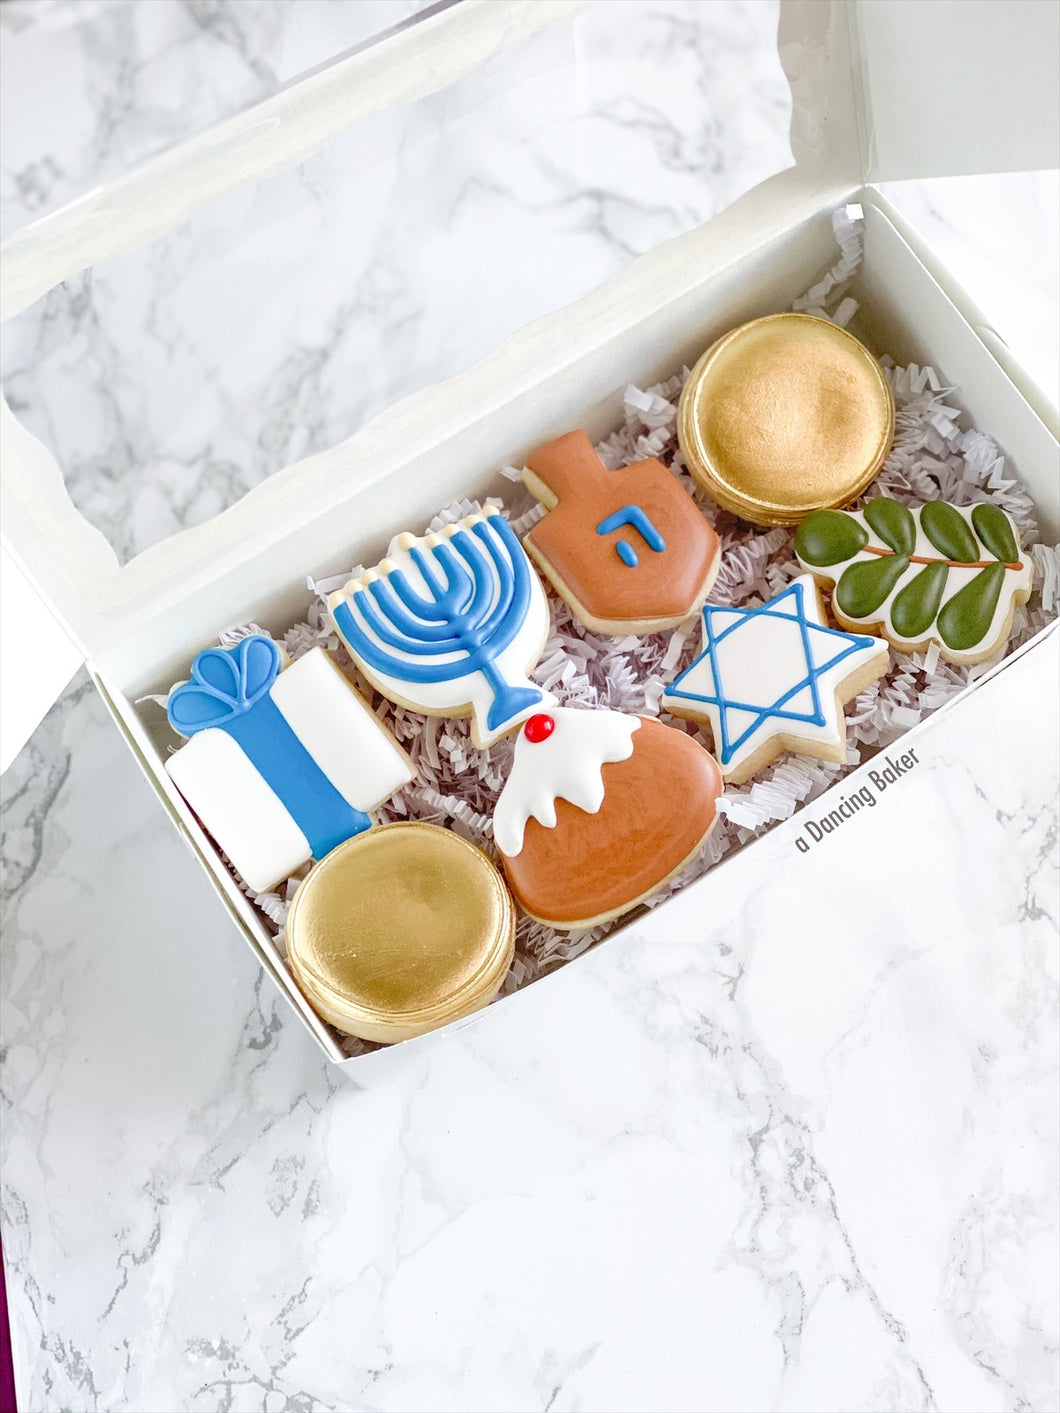 8 Hanukkah minis set in gift box